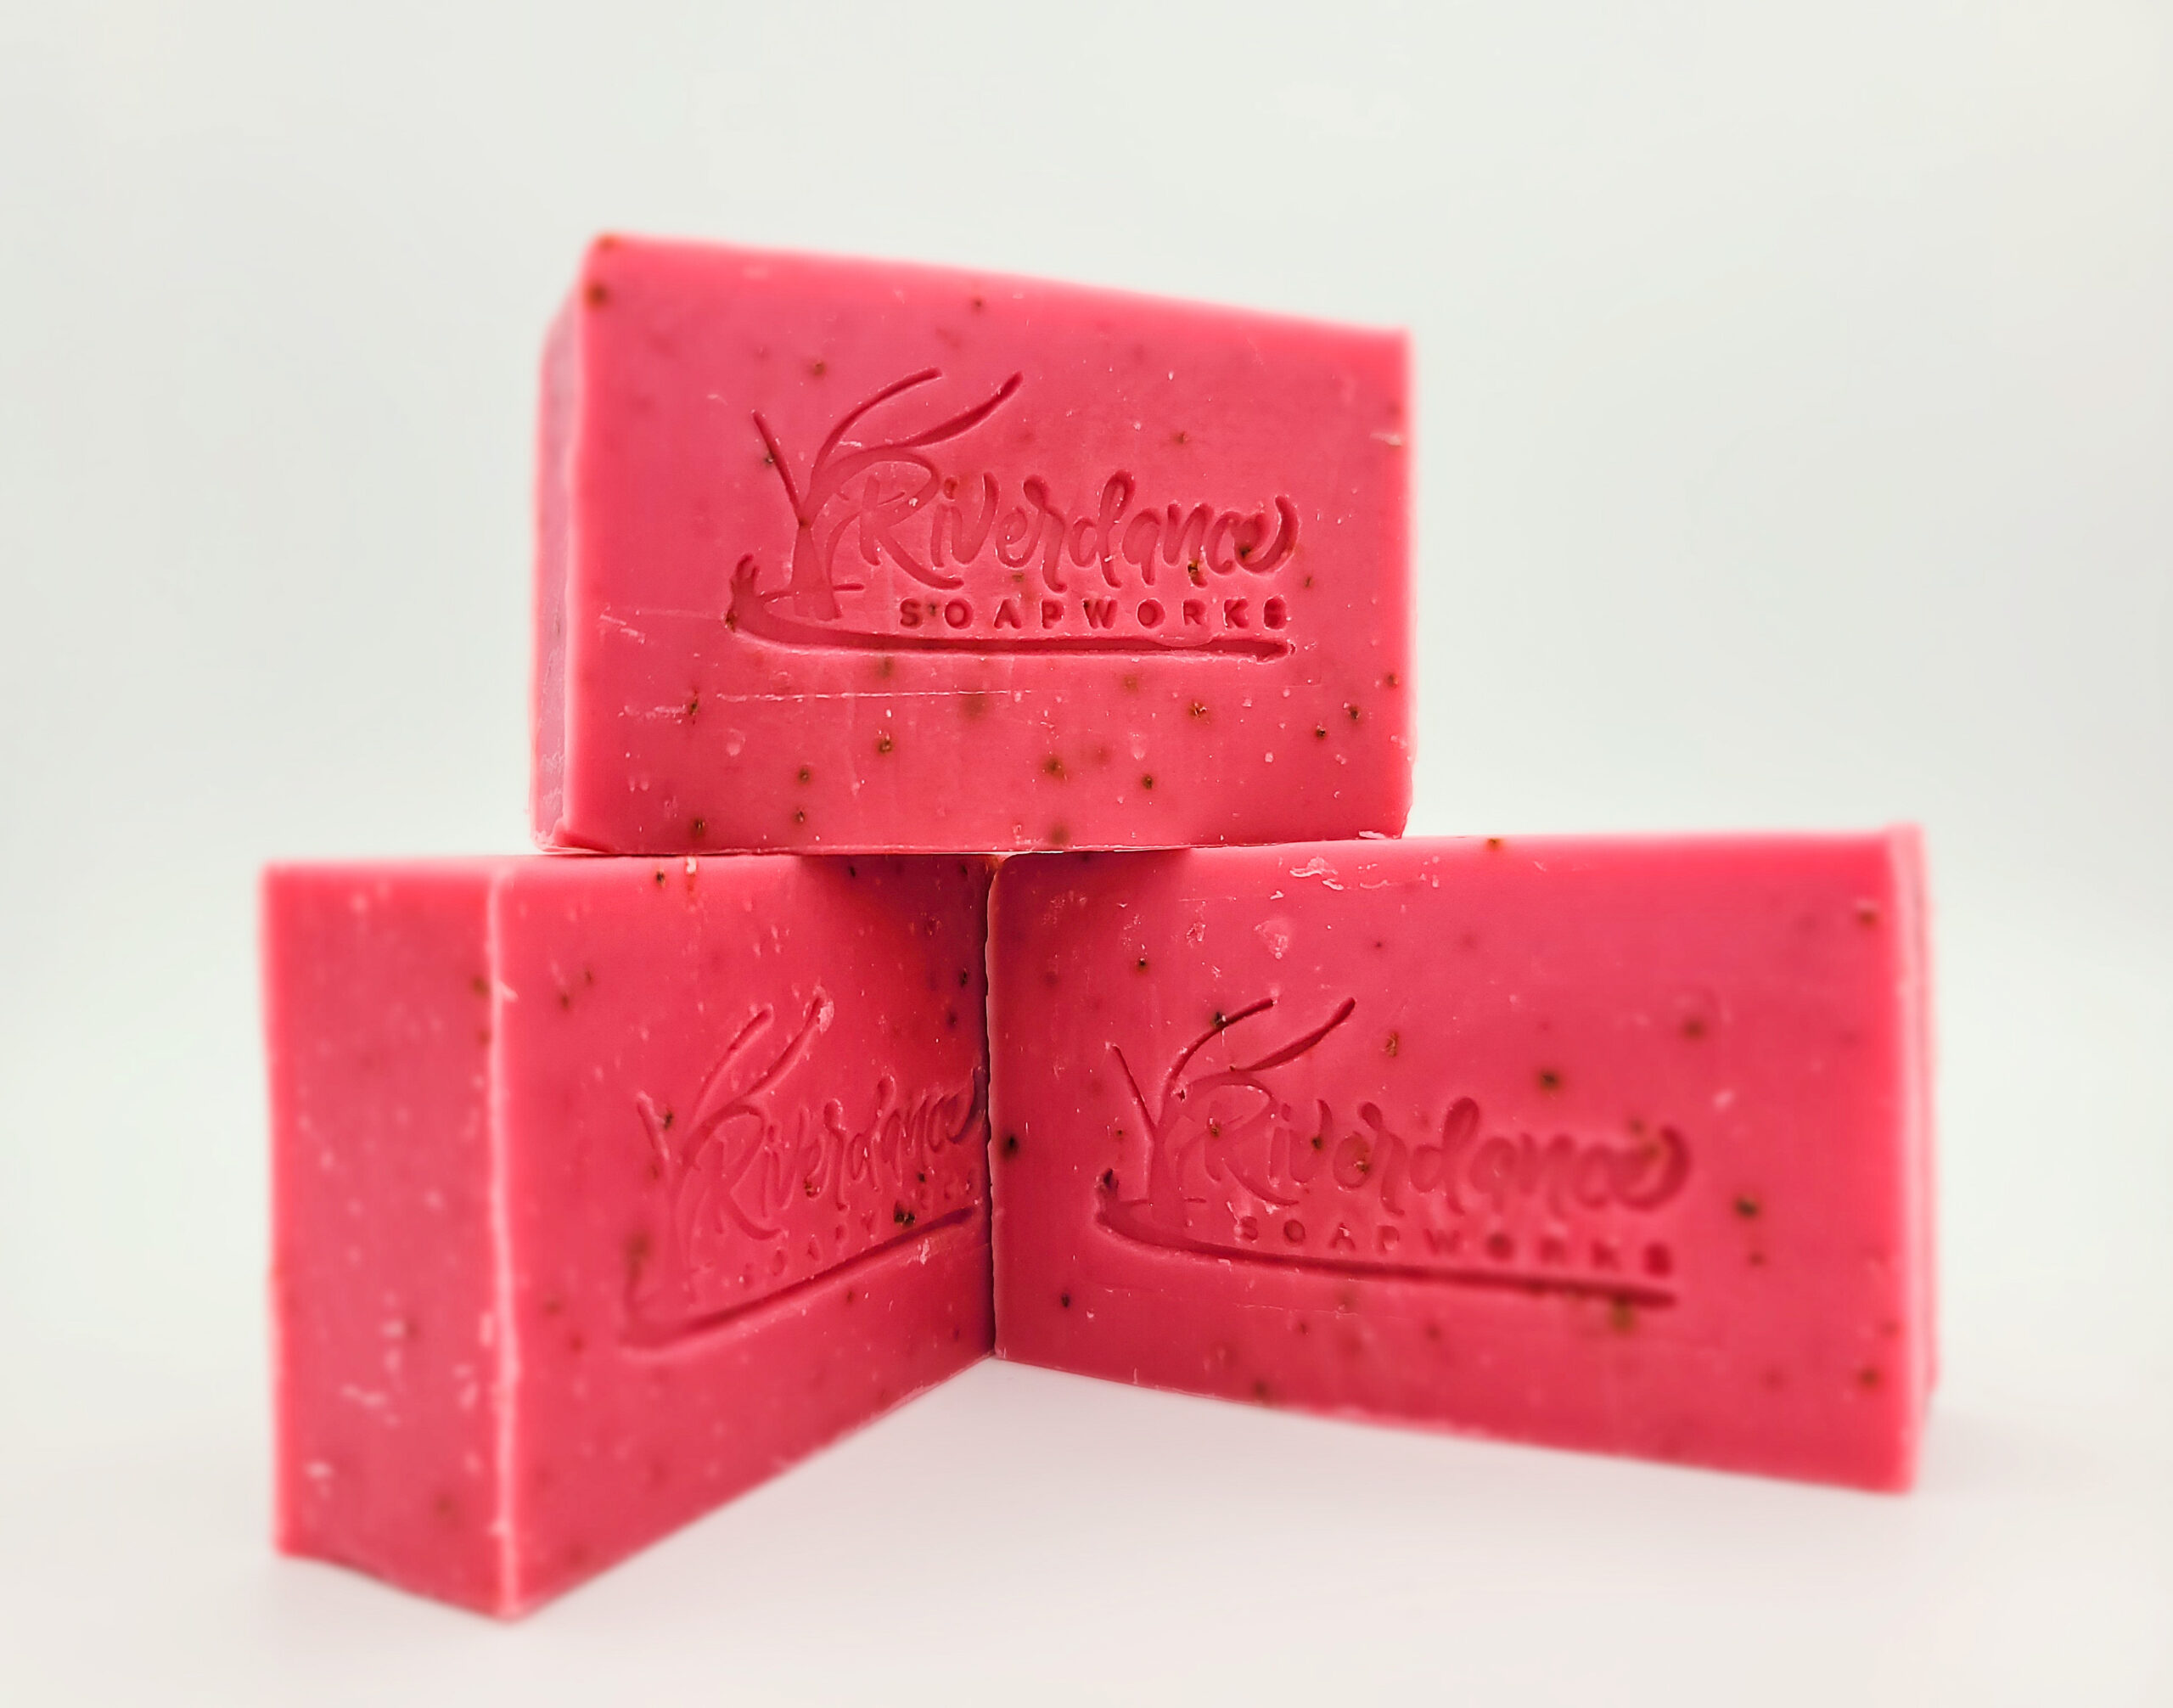 Raspberry Ale Alcohol soap bar product image